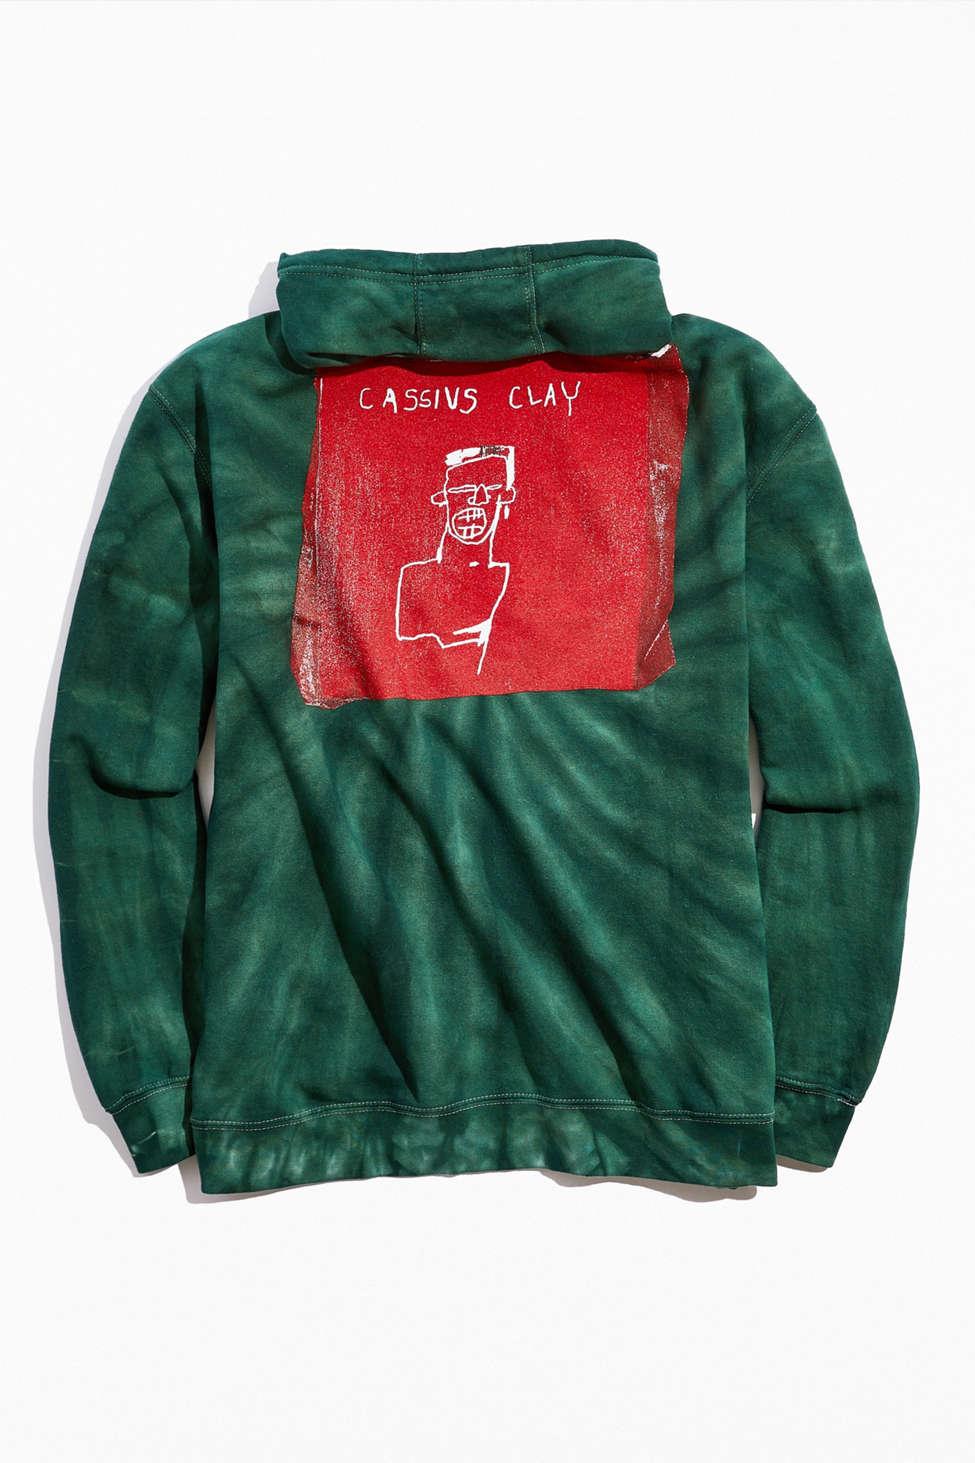 Urban Outfitters Basquiat Cassius Clay Tie-dye Hoodie Sweatshirt in Green  for Men | Lyst